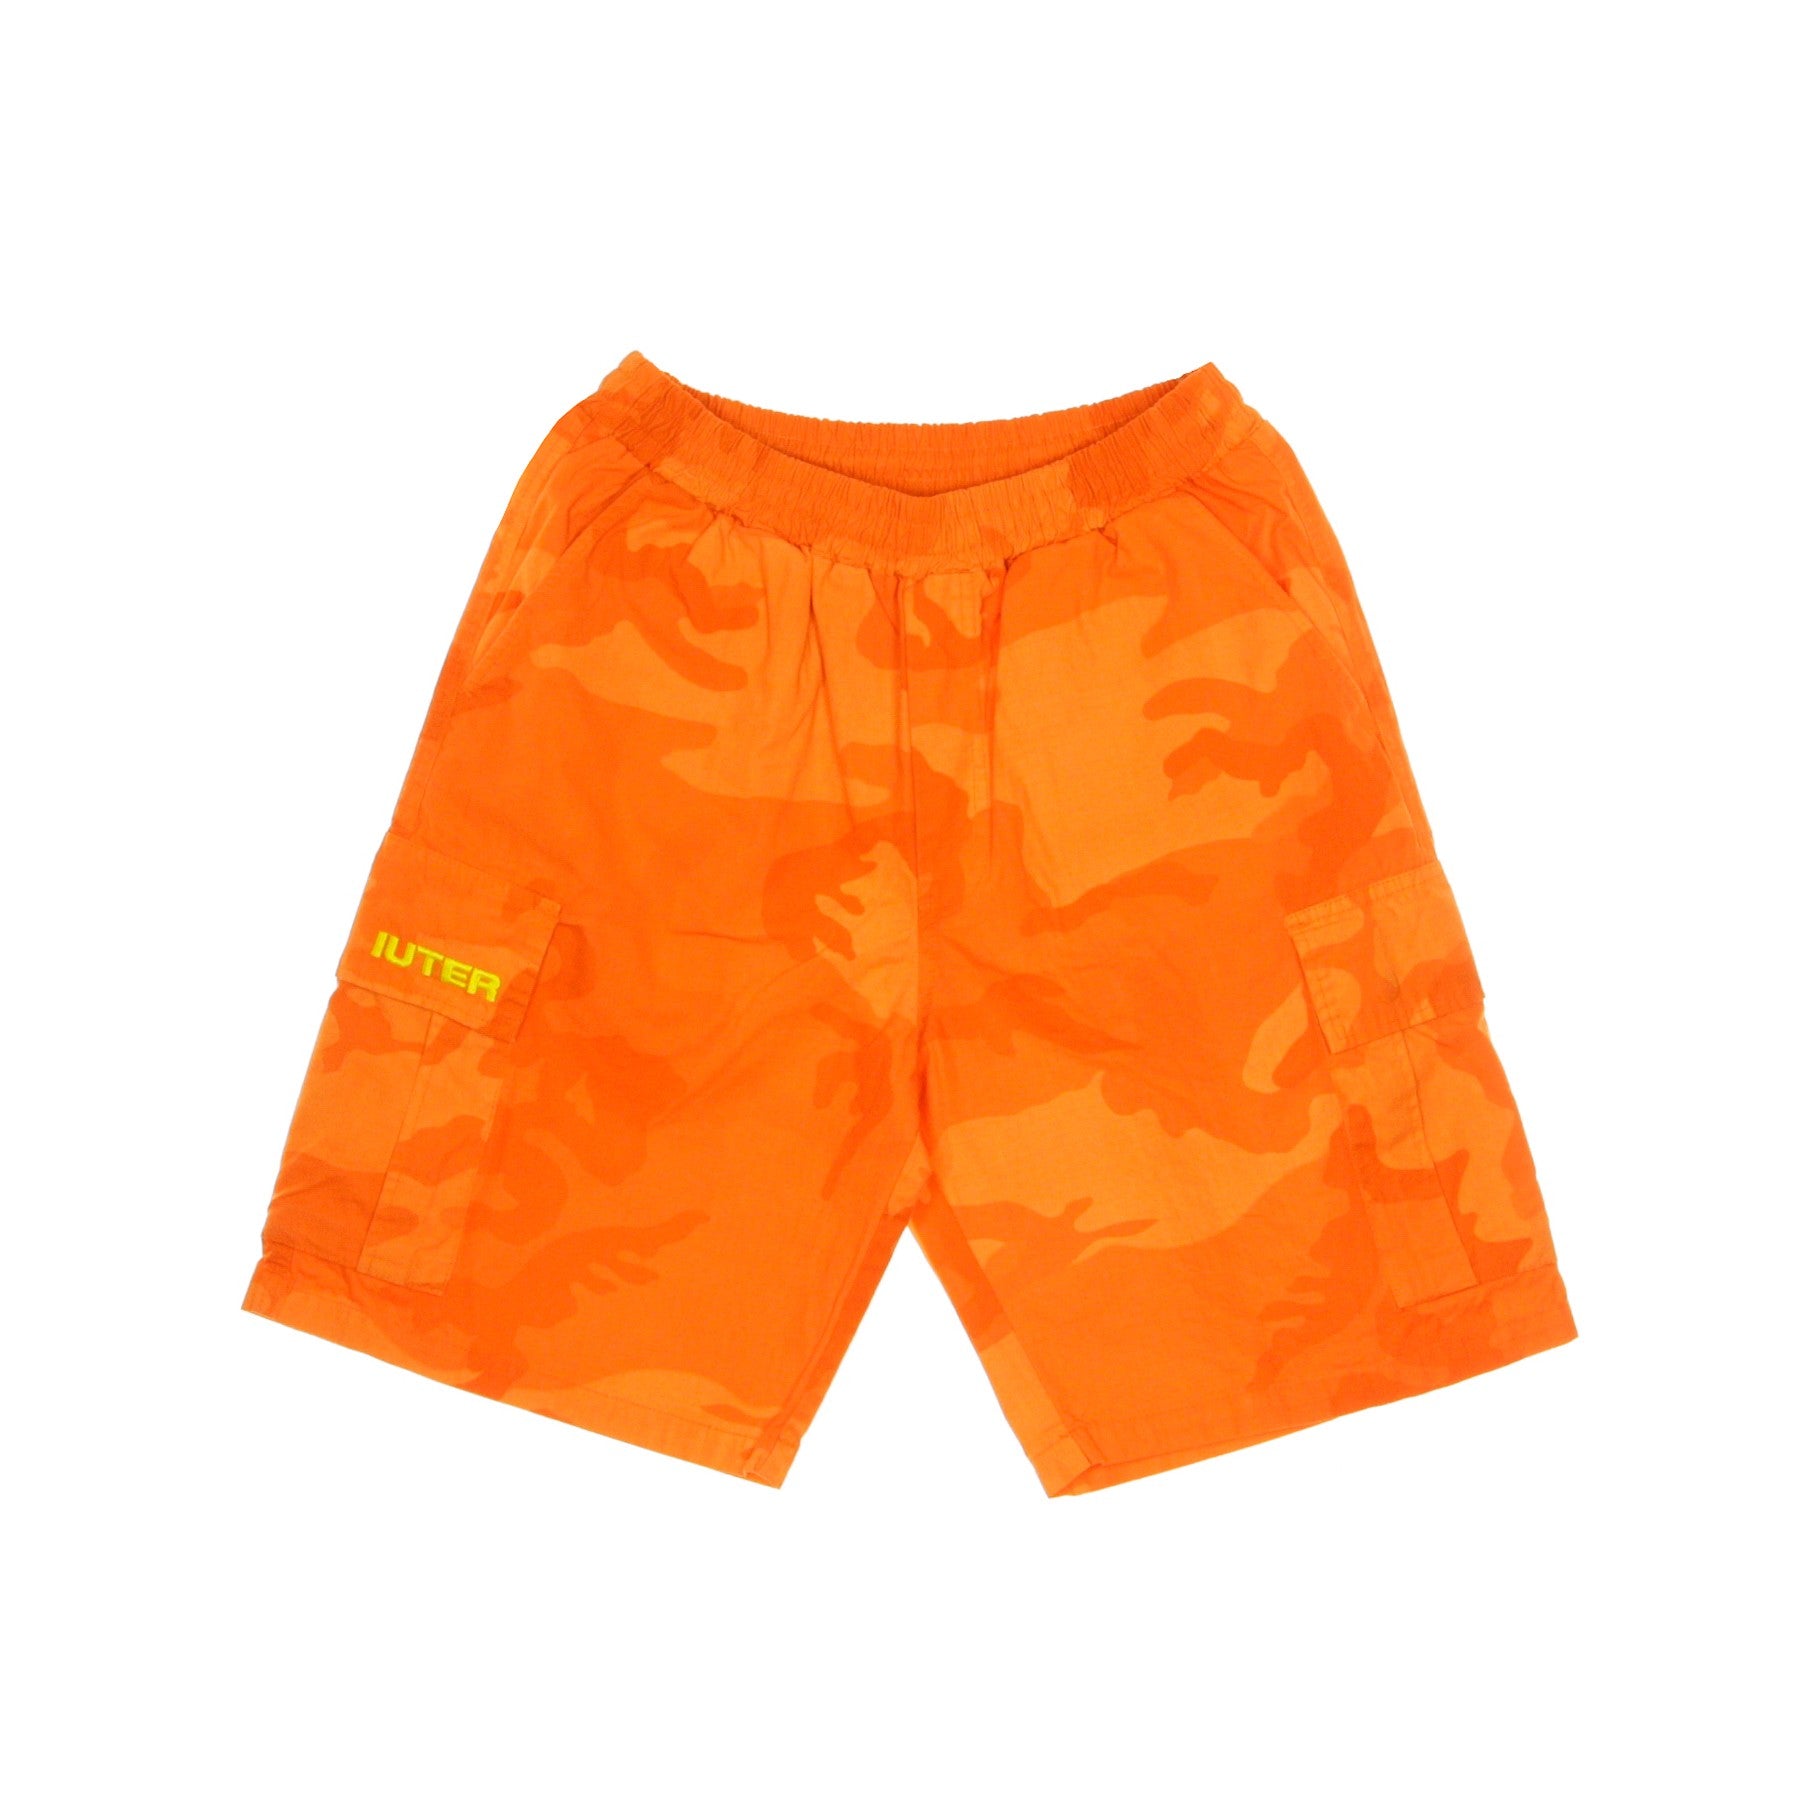 Iuter, Pantalone Corto Uomo Jogger Cargo Camo Shorts, Orange